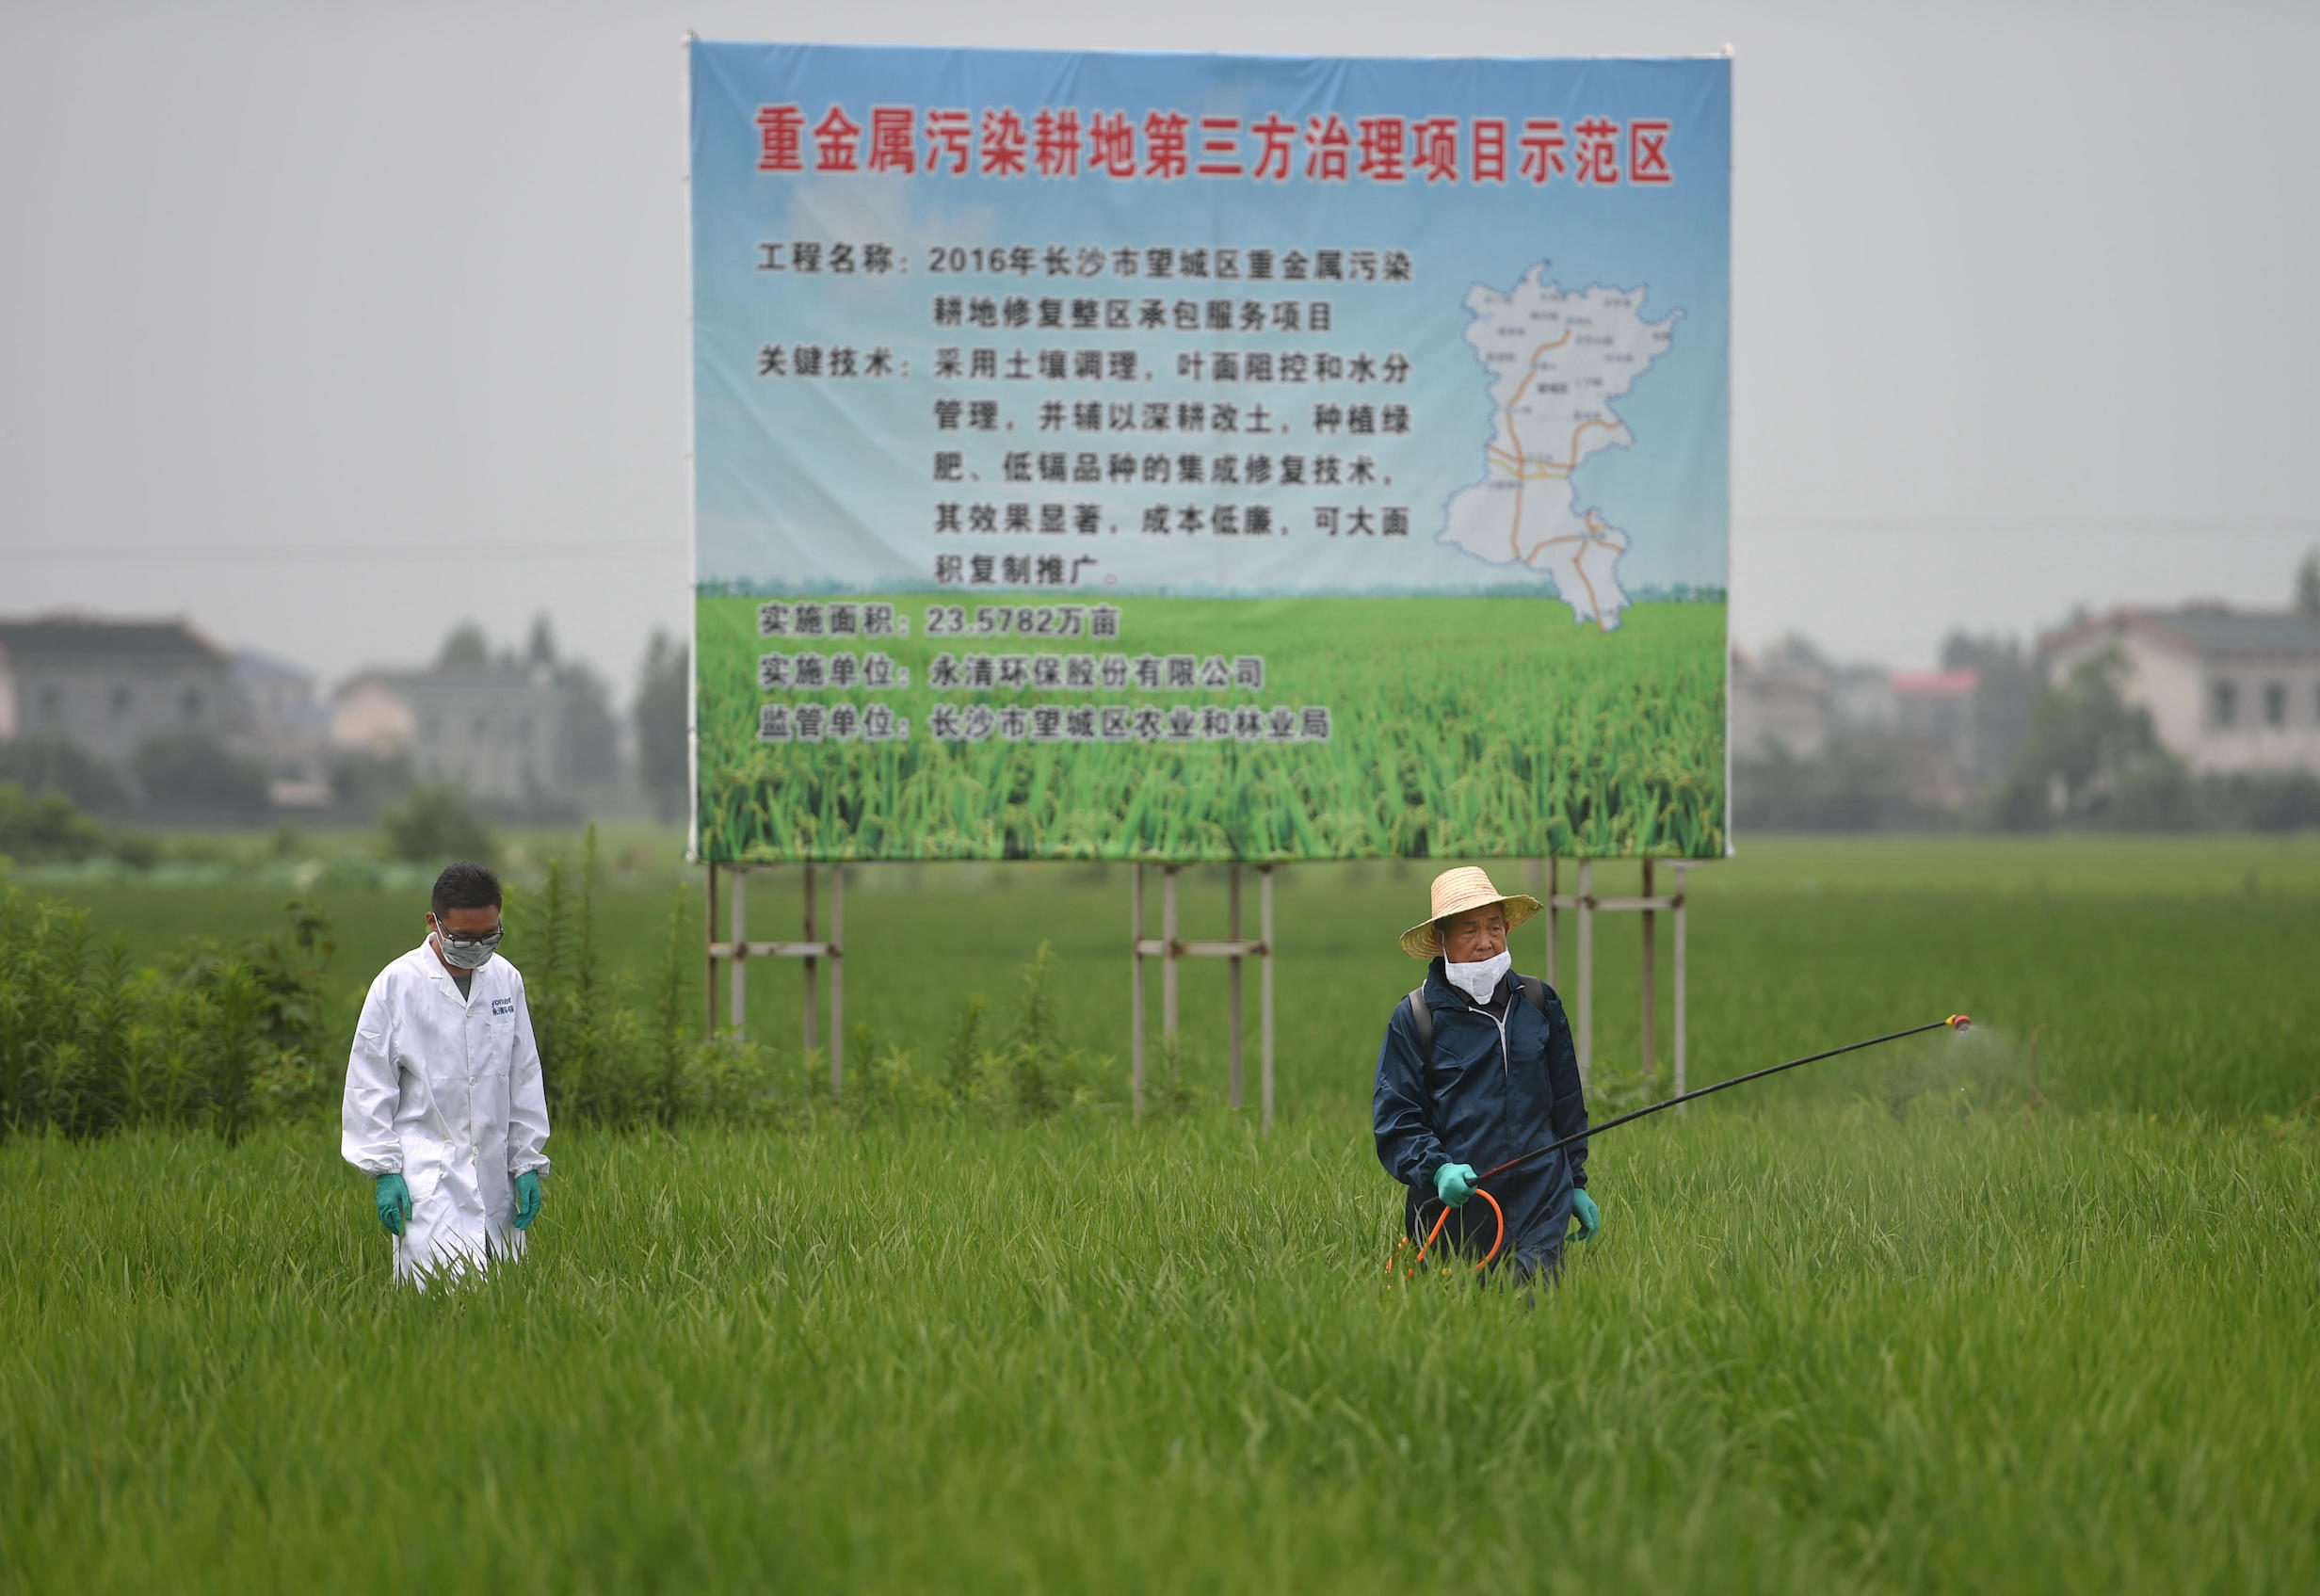 20220802_China-heavy-metal-soil-pollution-Hunan-spray_Alamy_G8E48M-e1659439191656.jpg